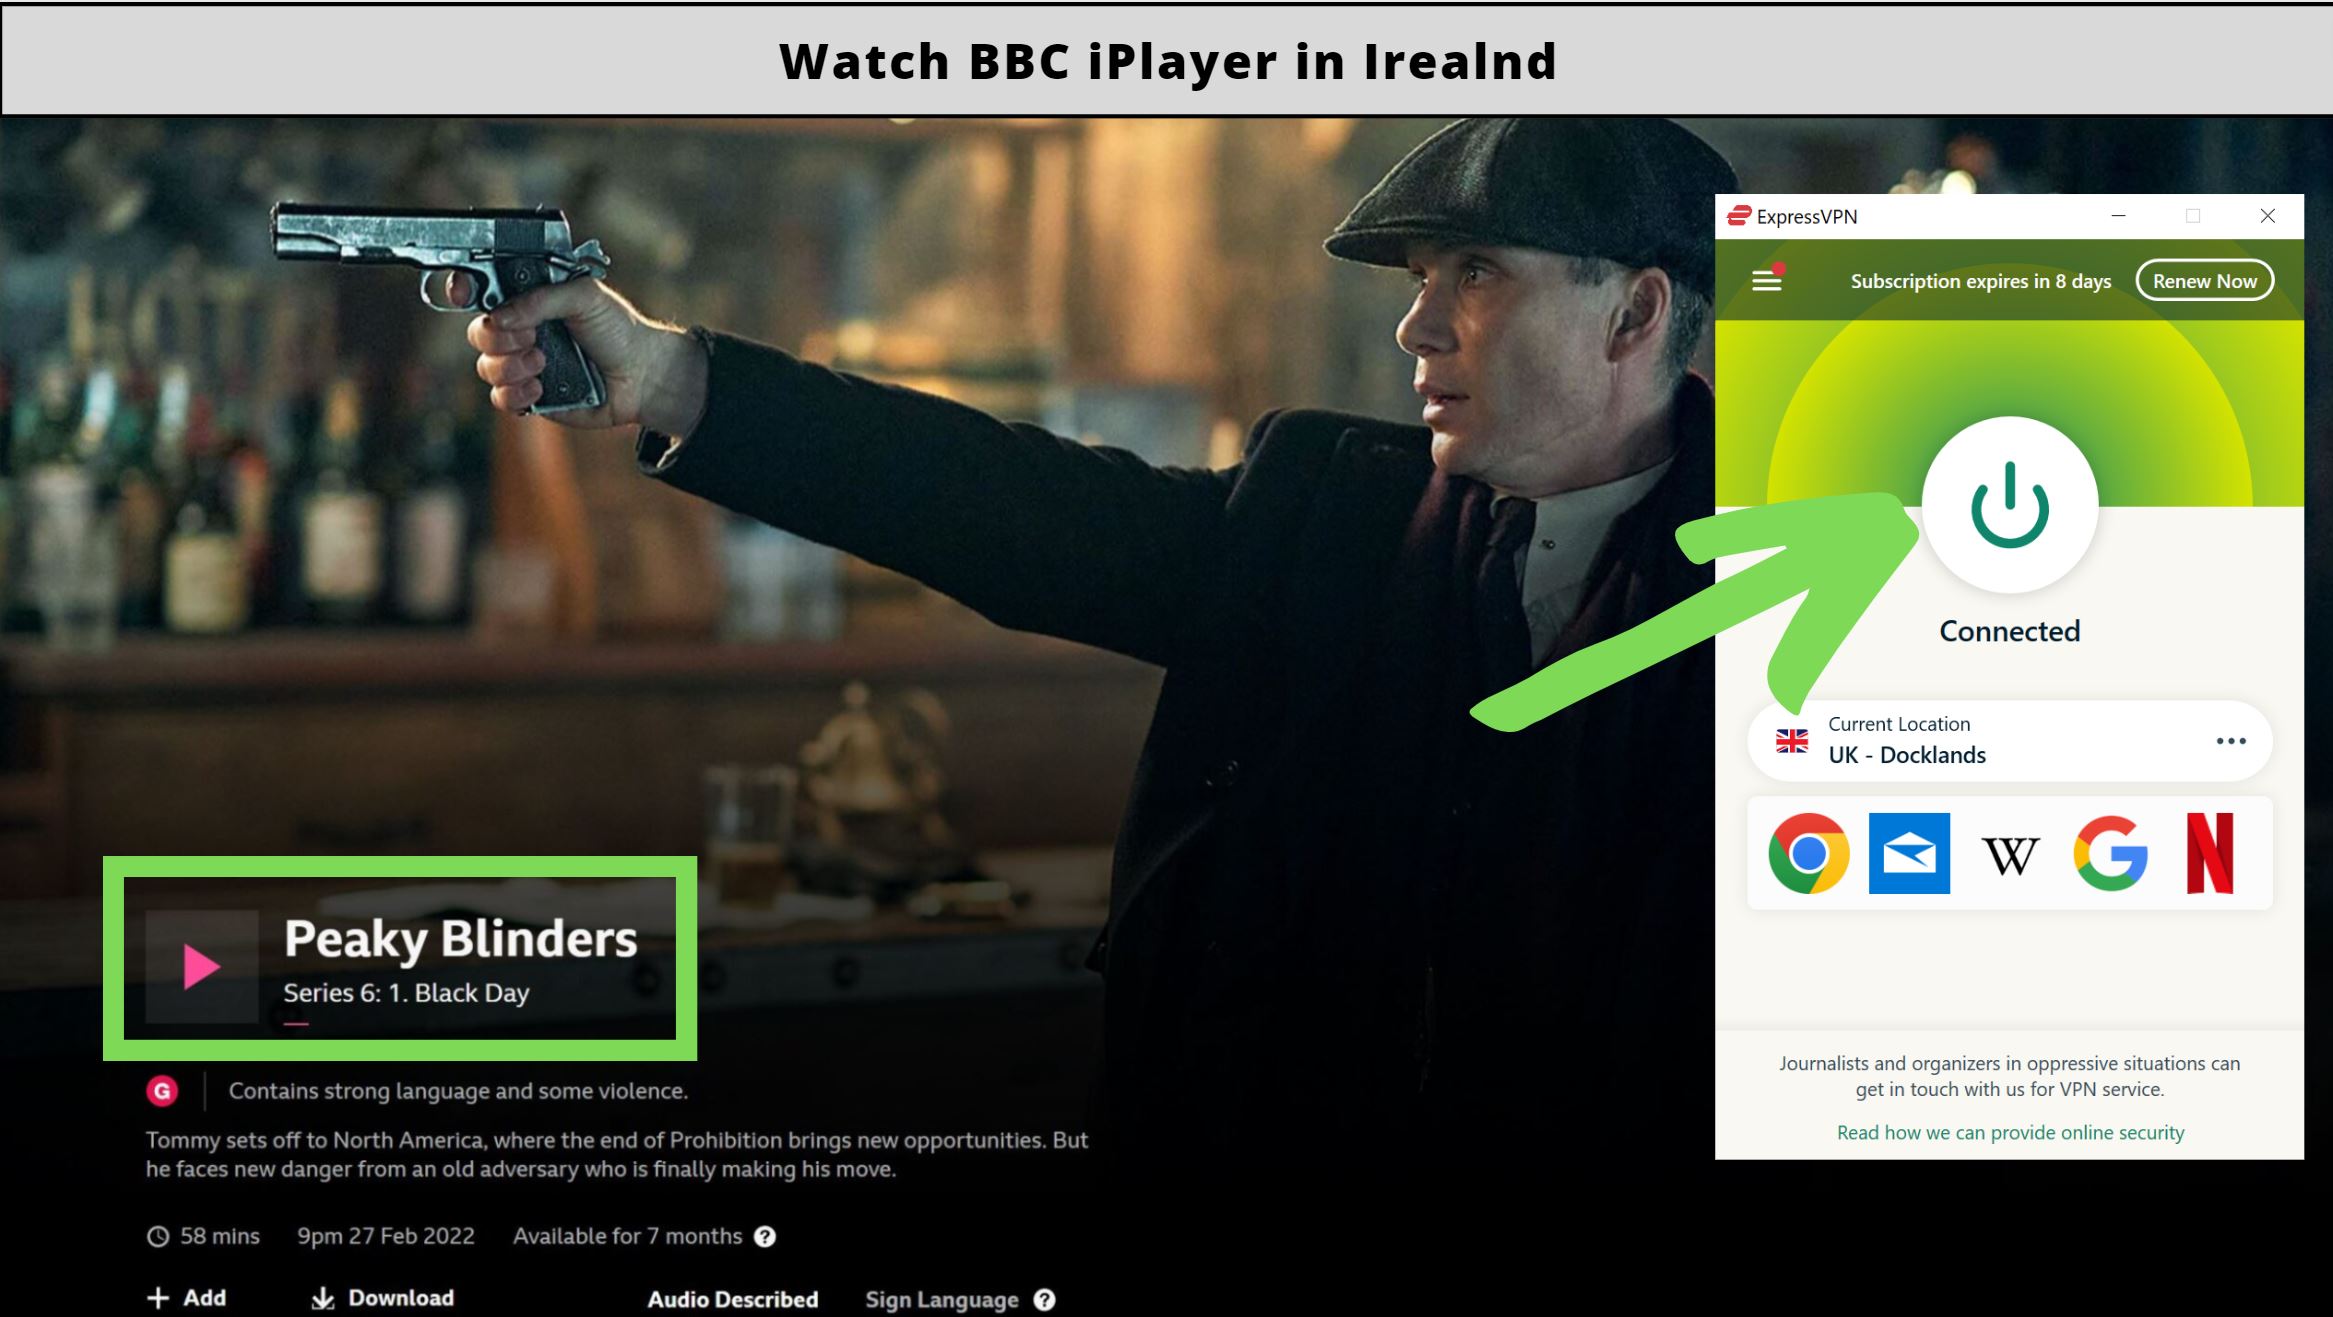 Access BBC iPlayer in Ireland